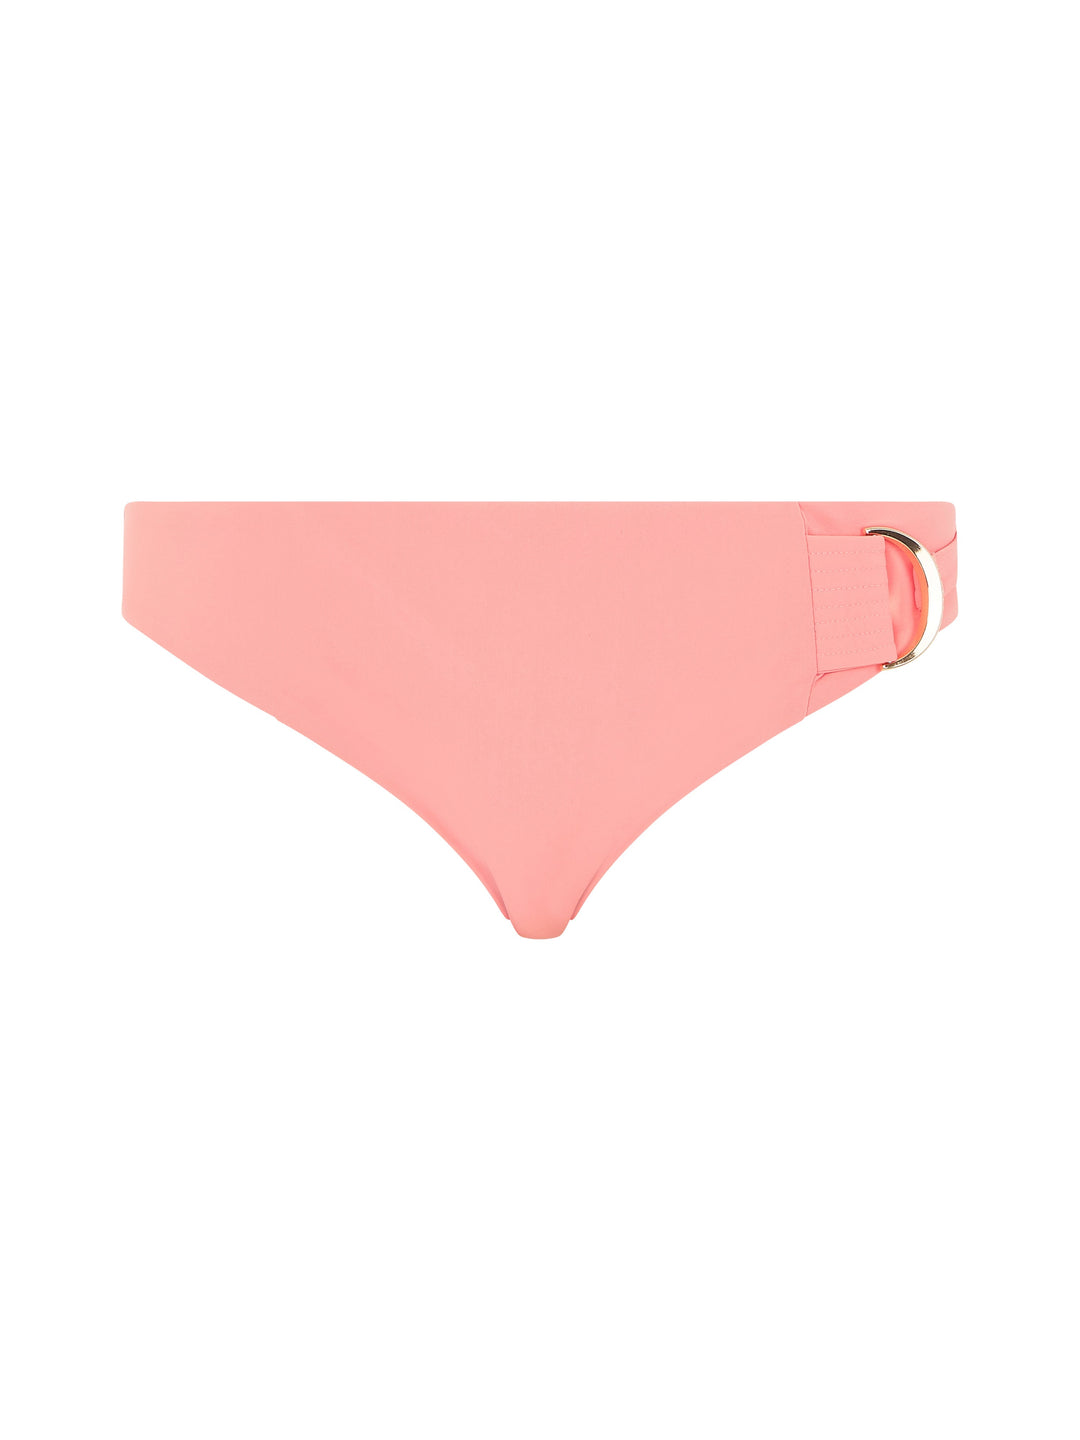 Costumi da bagno Chantelle - Slip bikini celeste Slip bikini rosa Costumi da bagno Chantelle